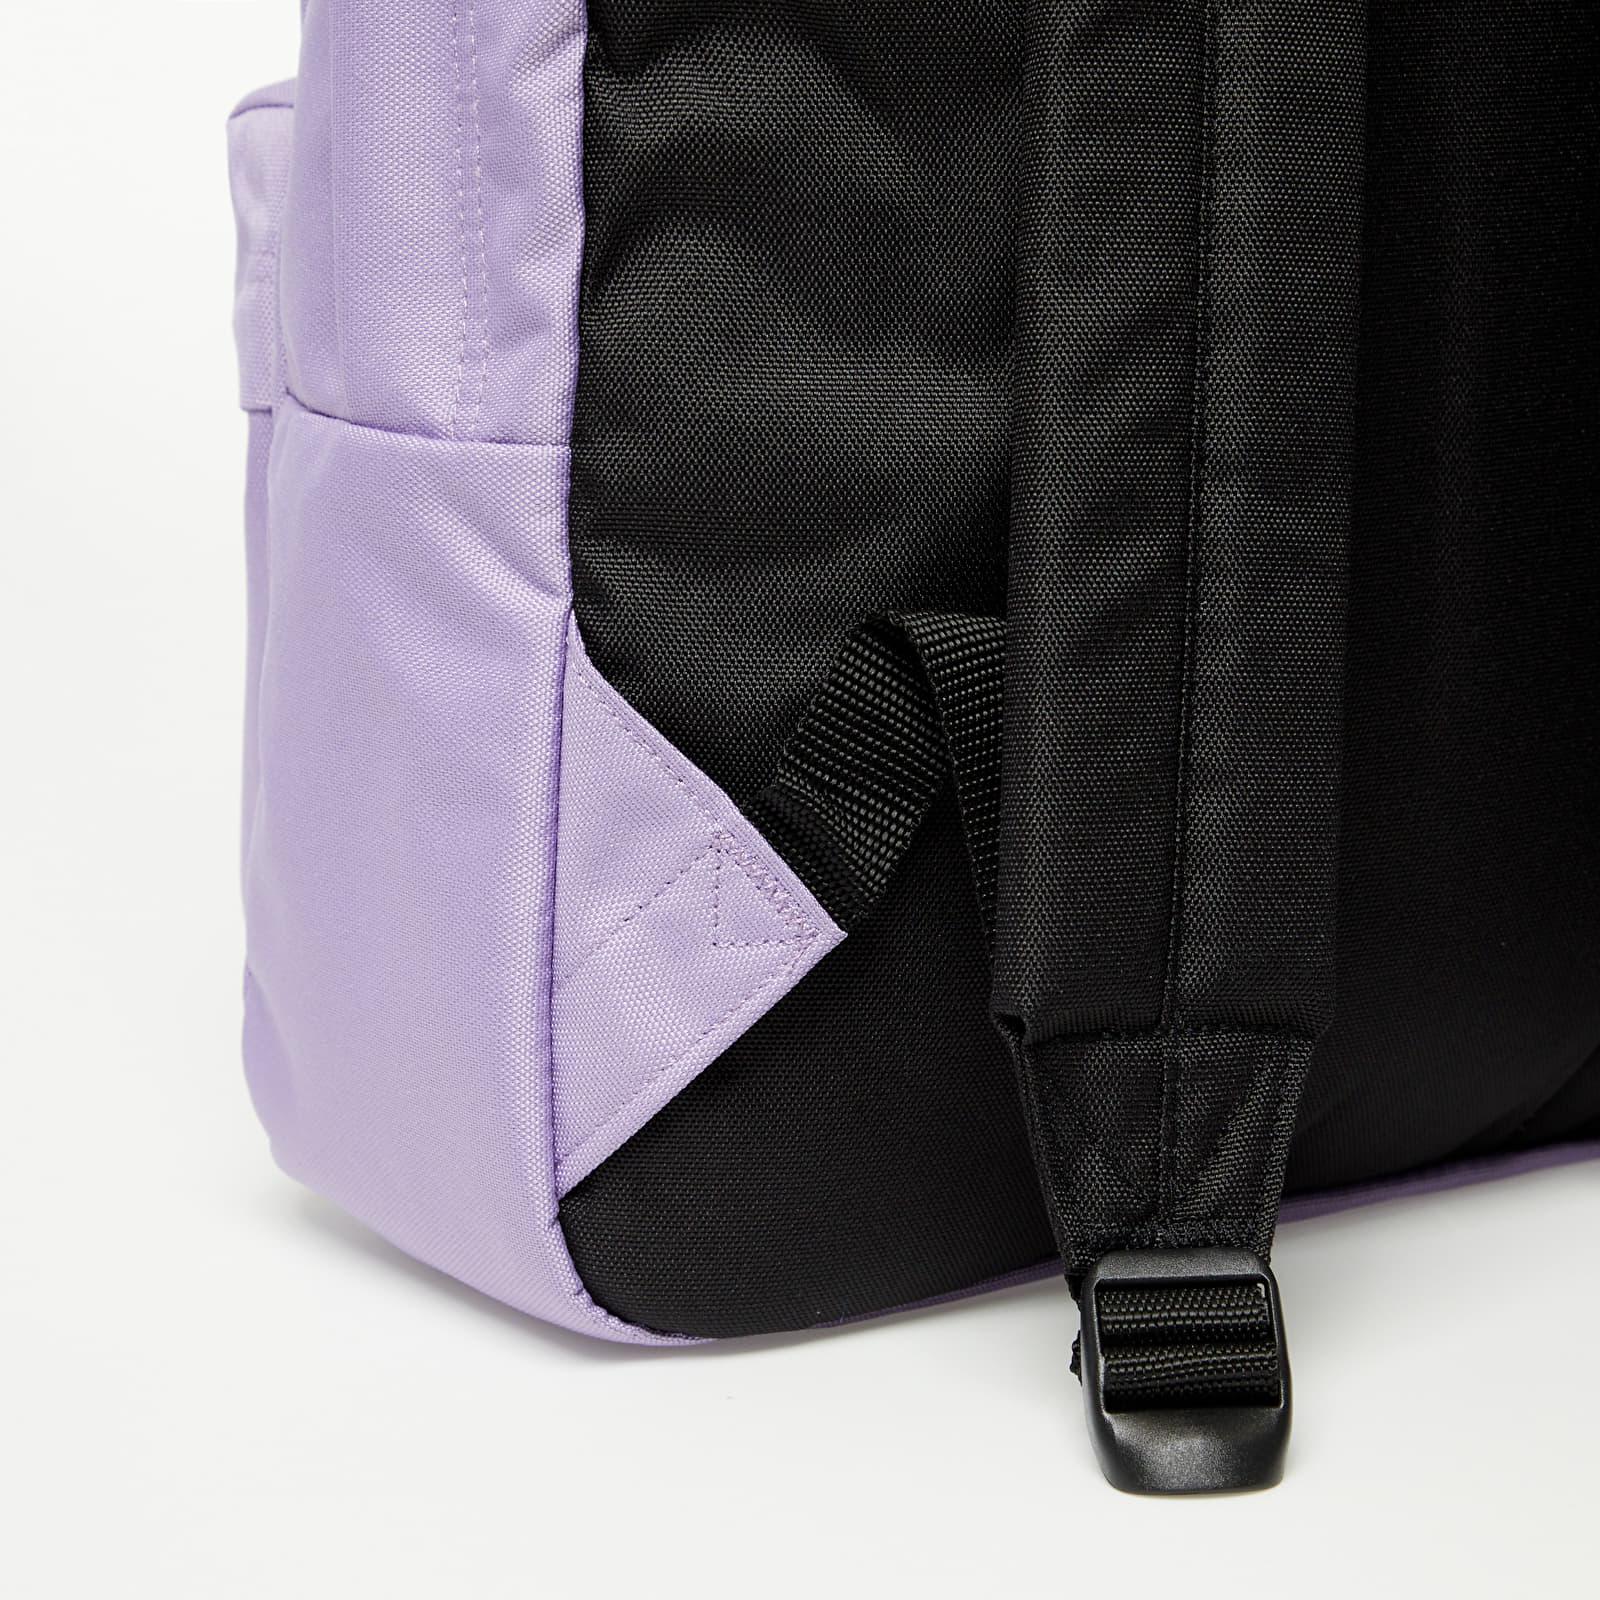 Vans Realm Backpack Chalk Violet in Purple | Lyst